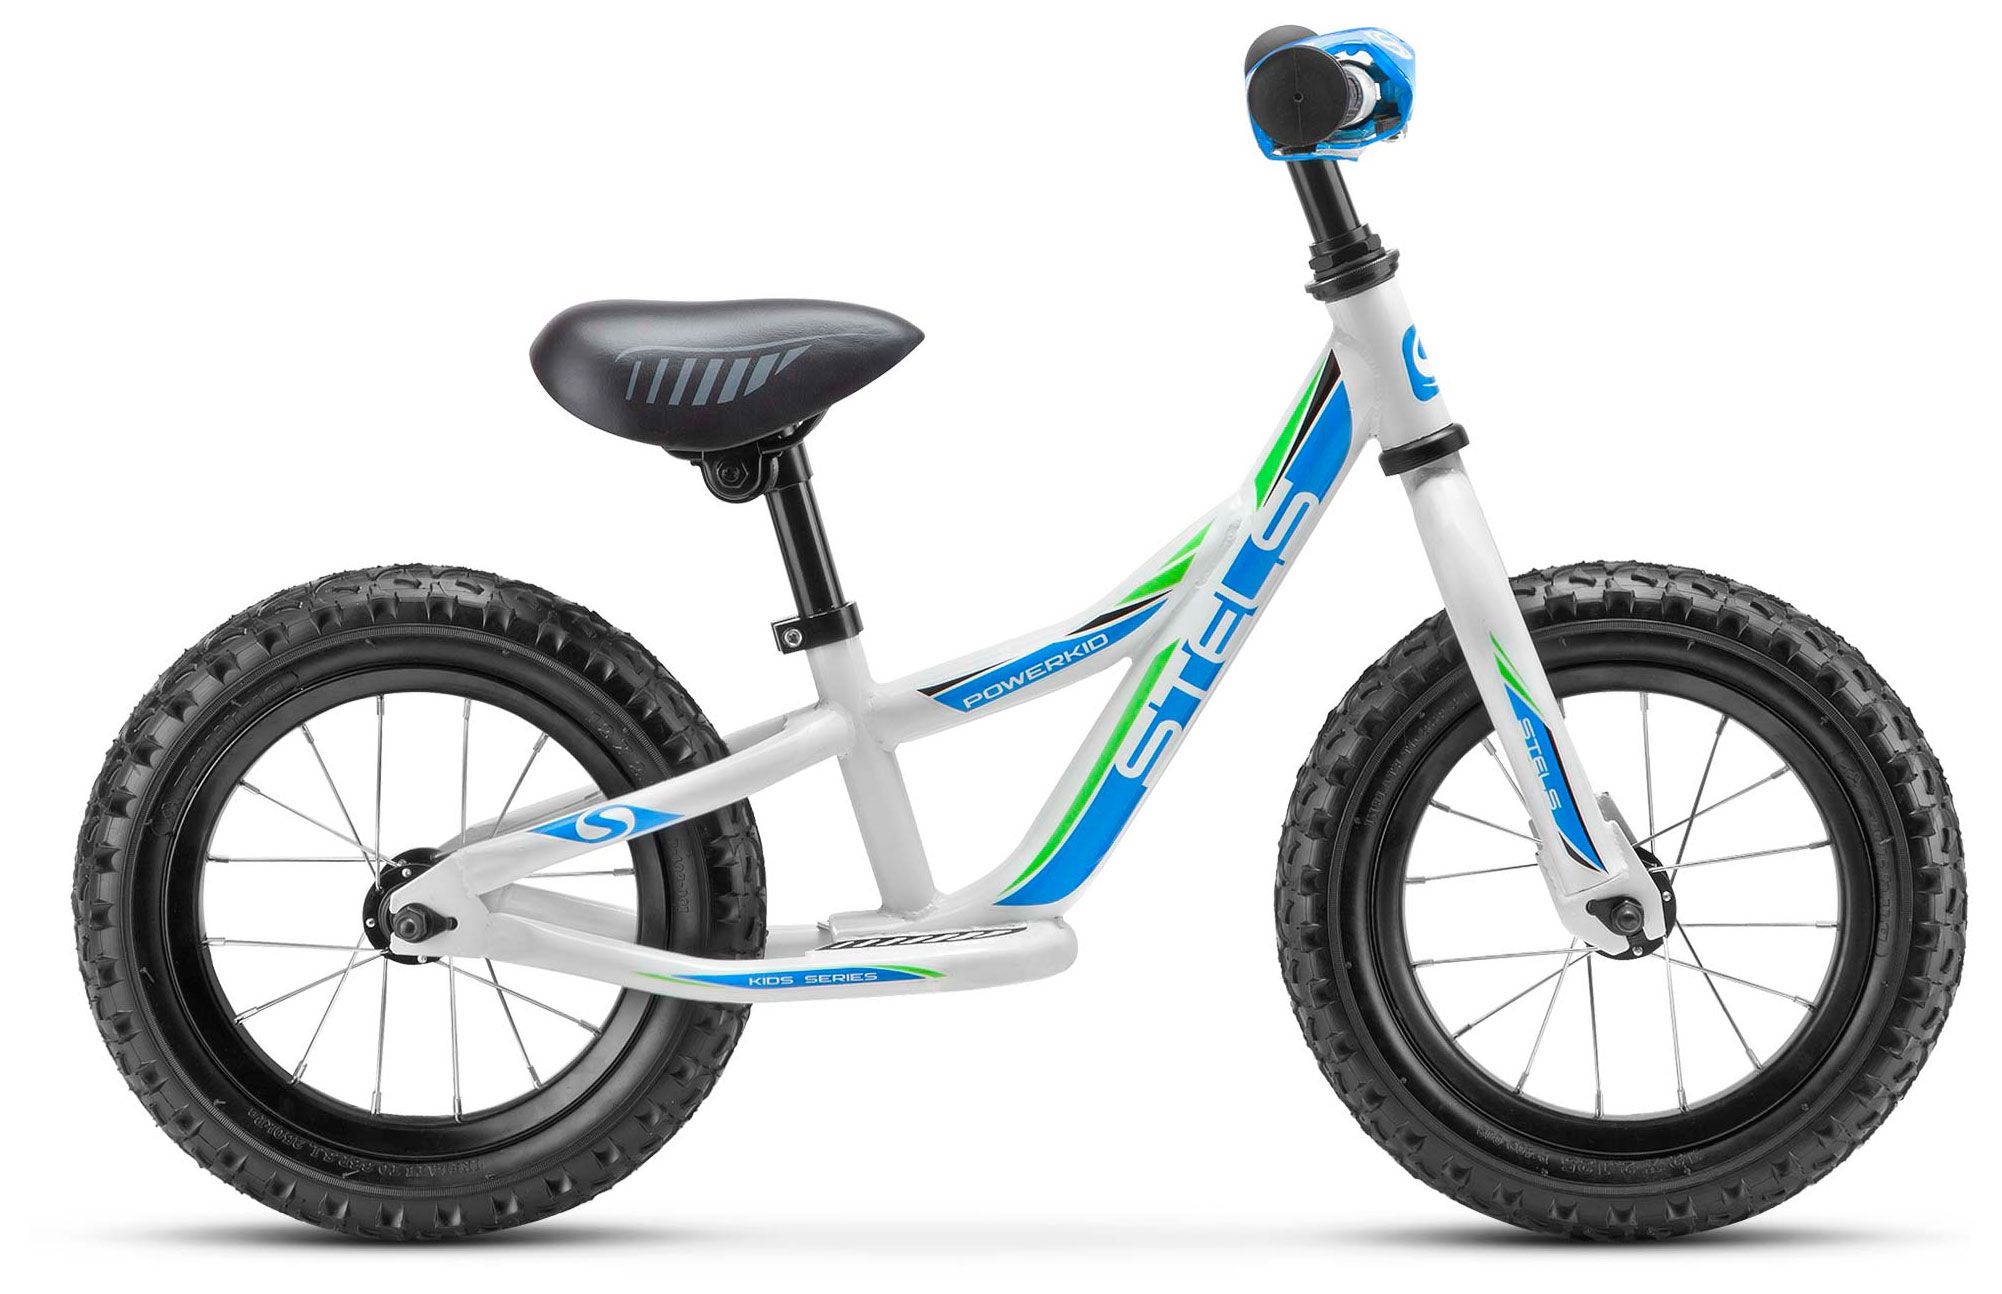  Велосипед Stels Powerkid 12 (Boy) V020 2018